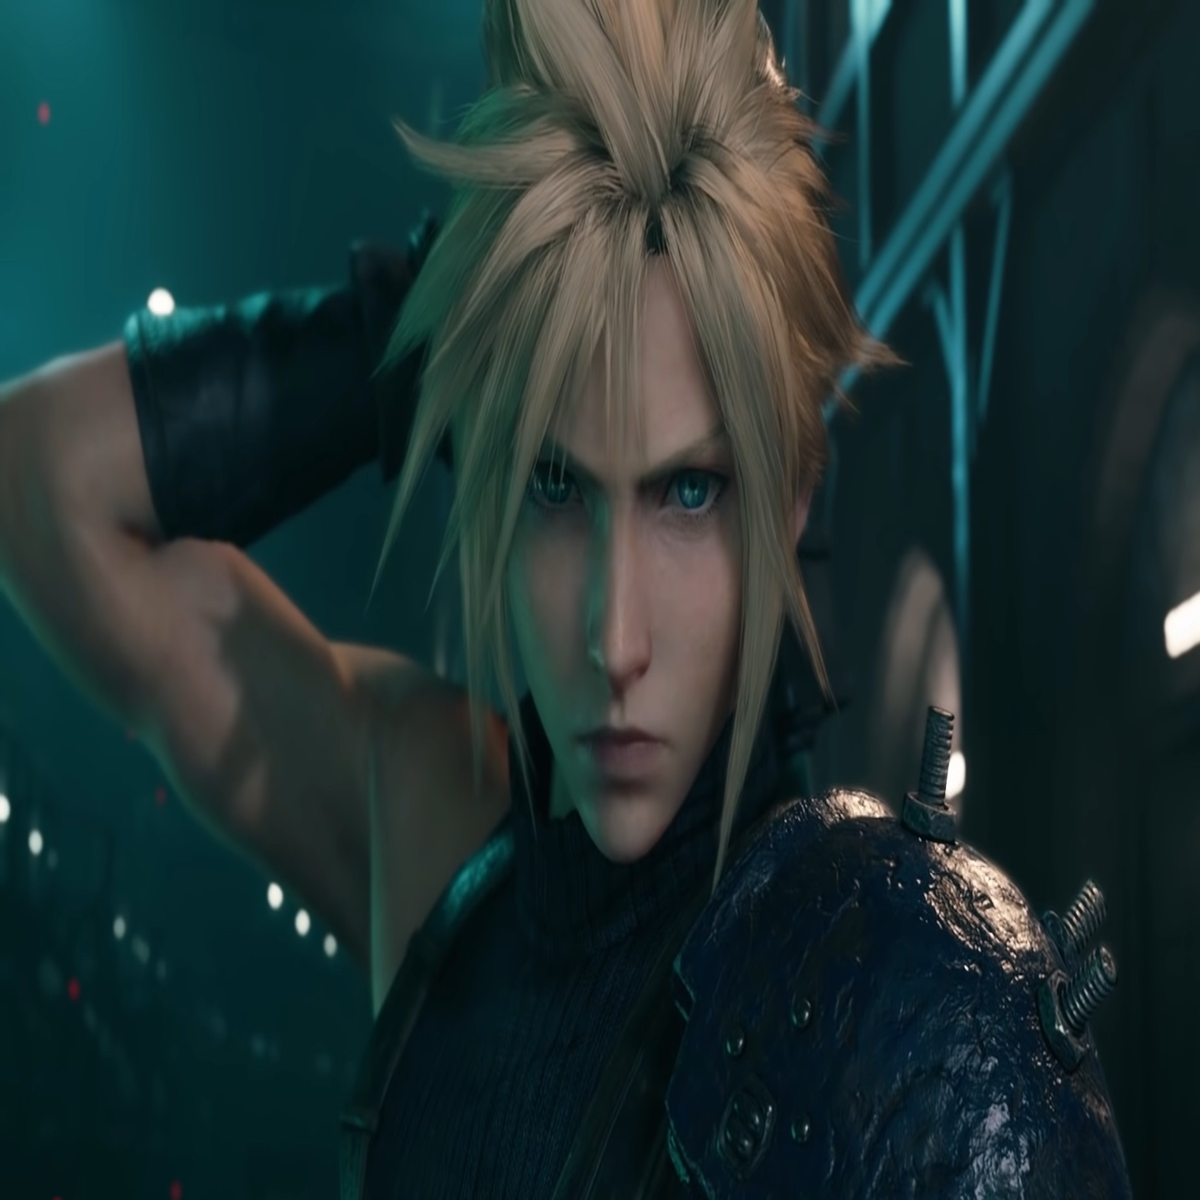 Final Fantasy VII Remake Intergrade Releases; 5 Mods To Fulfil